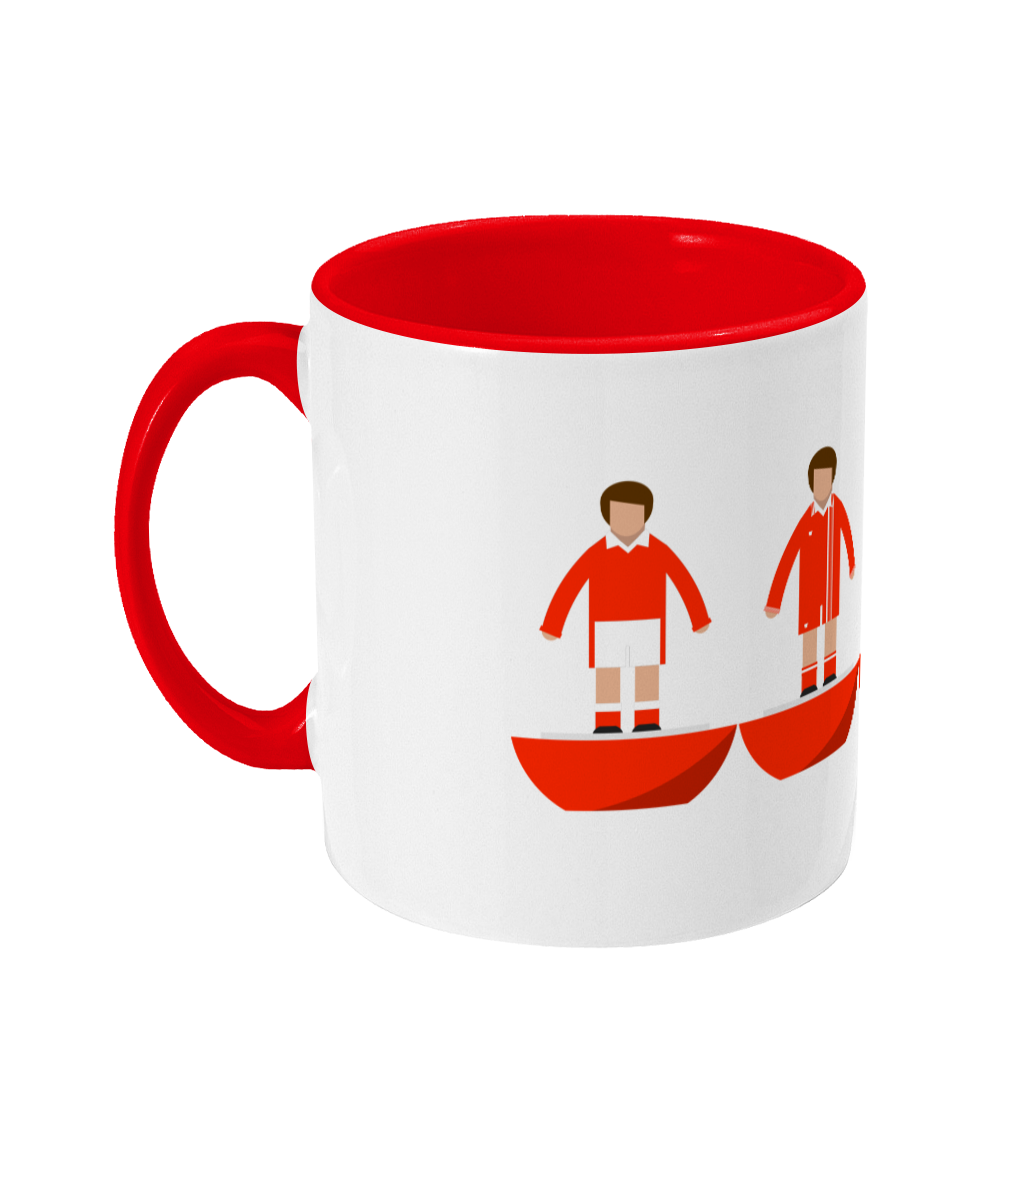 Football Kits 'Aberdeen combined' Mug